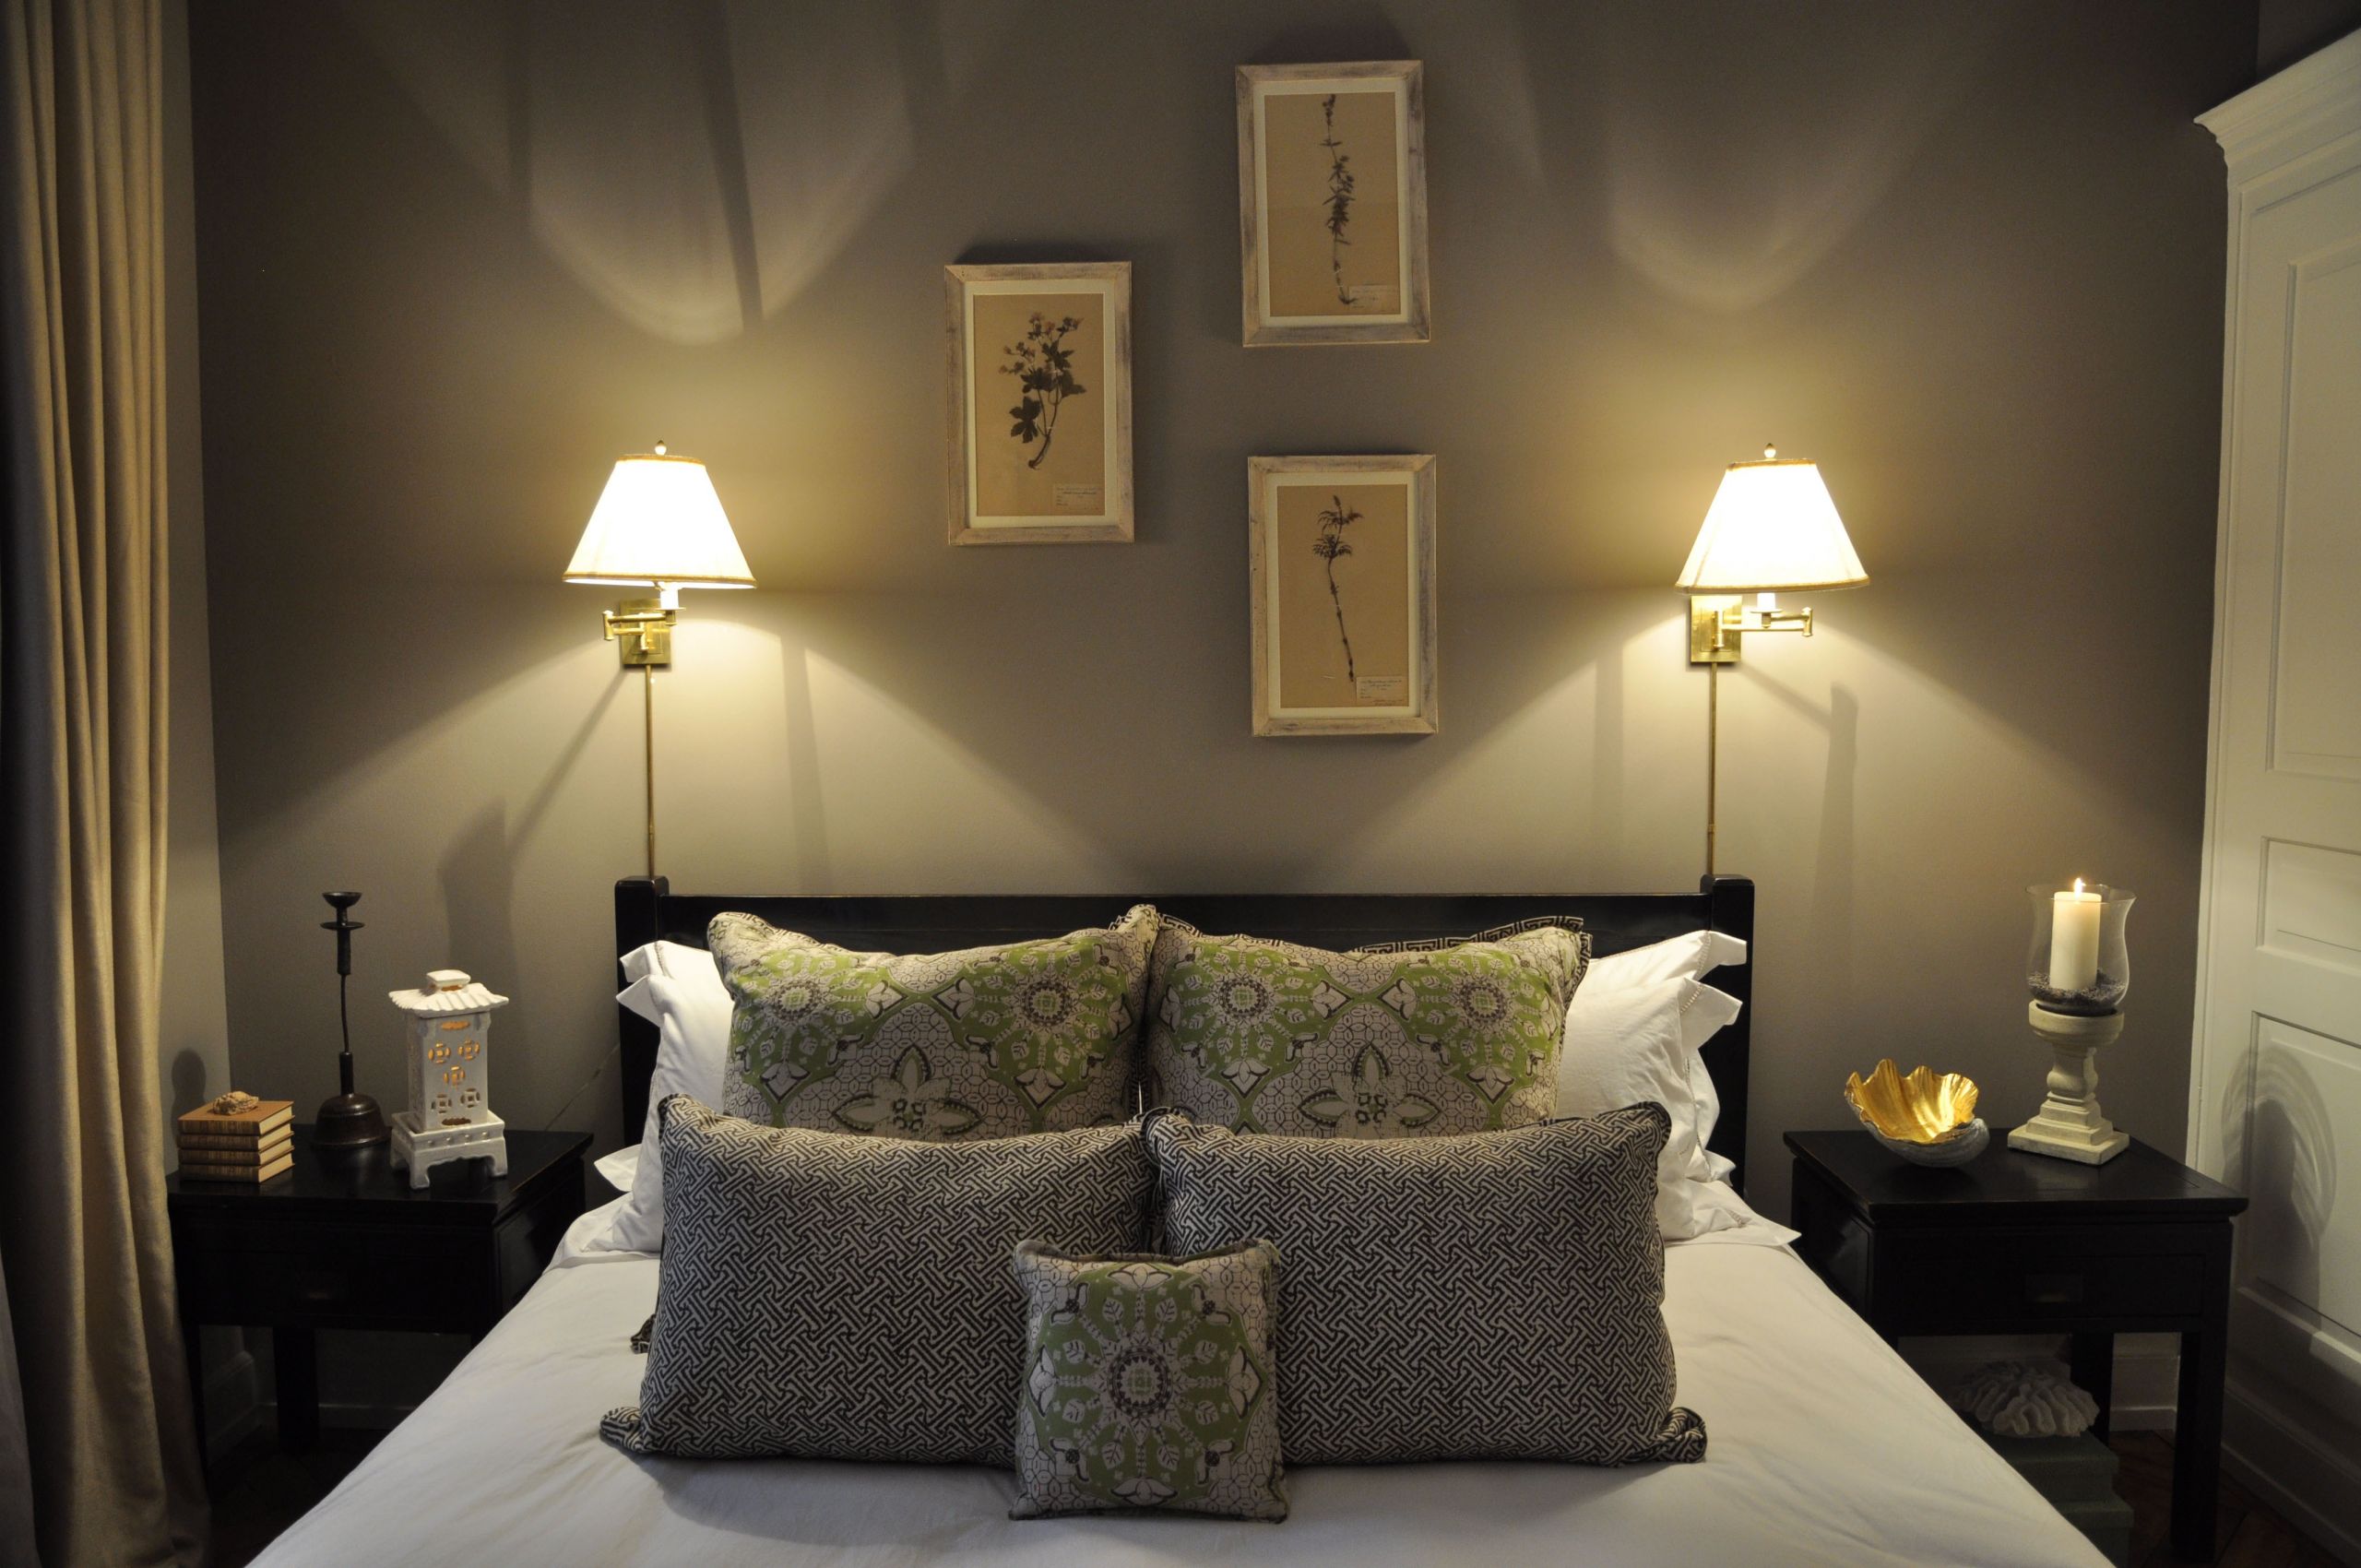 Wall Lights For Bedroom
 Popular Plug In Wall Lamps For Bedroom Ideas Bedroom